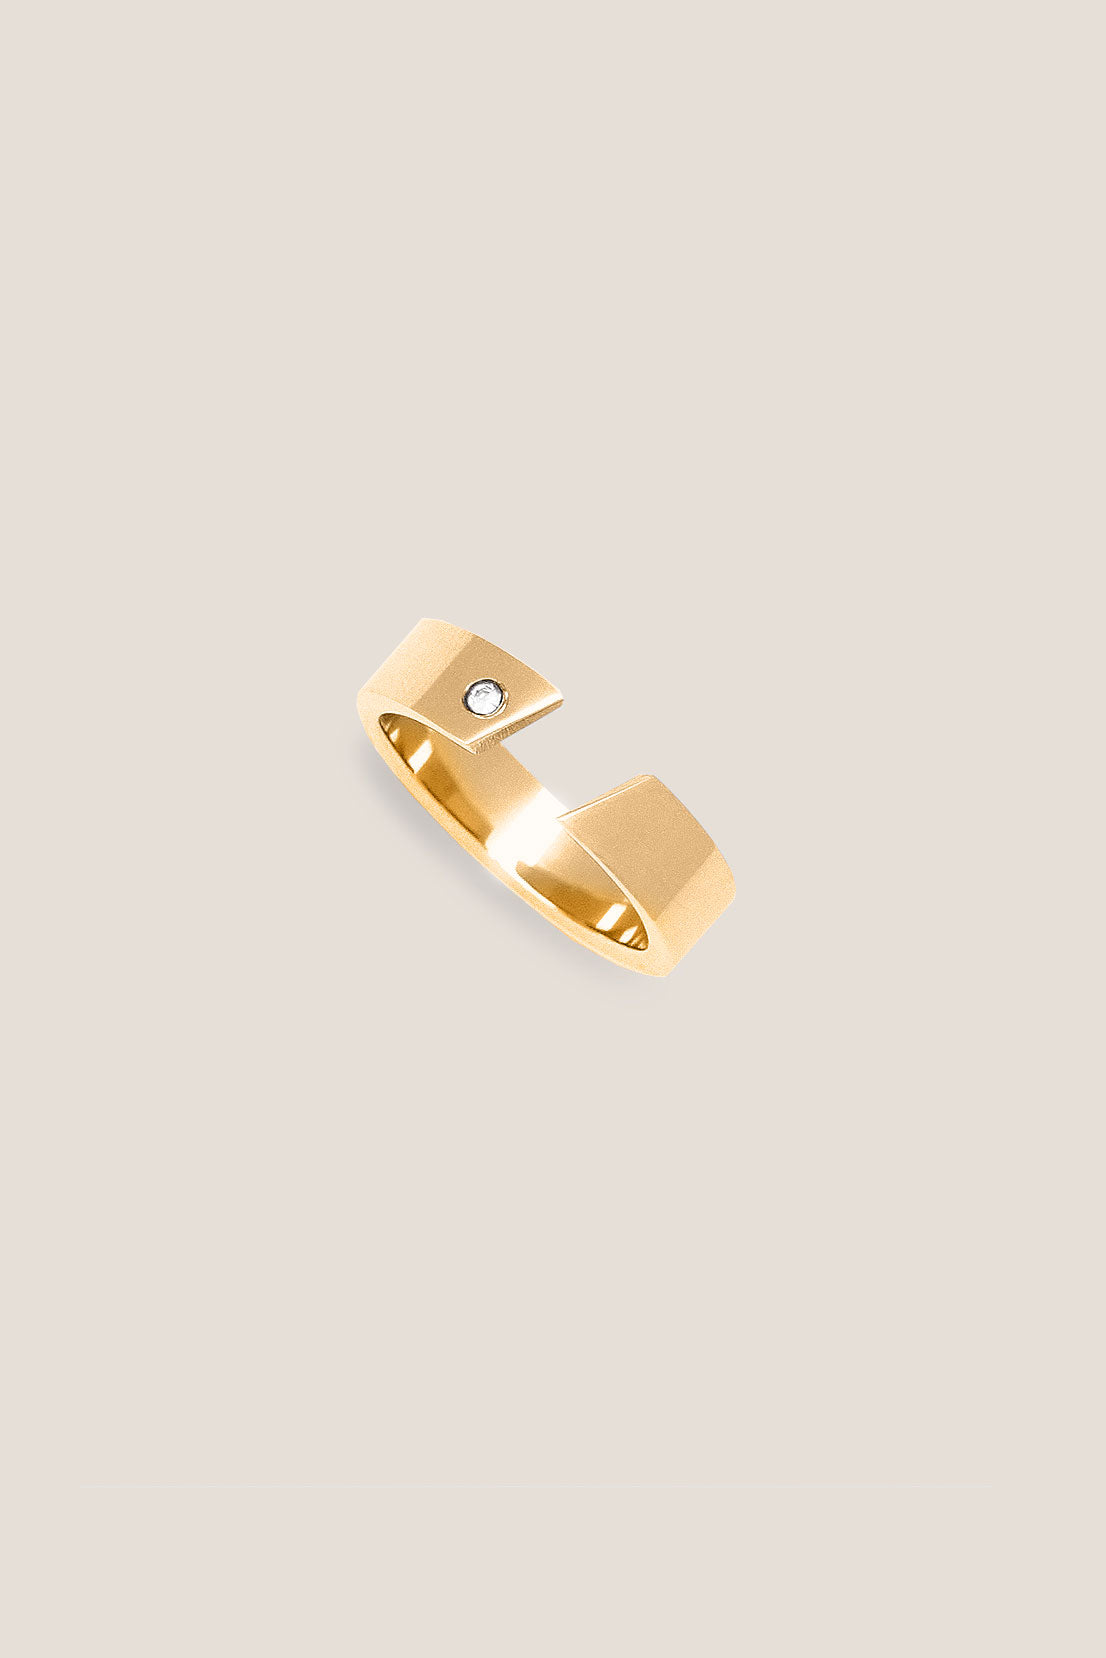 Hera Slim Gold Ring